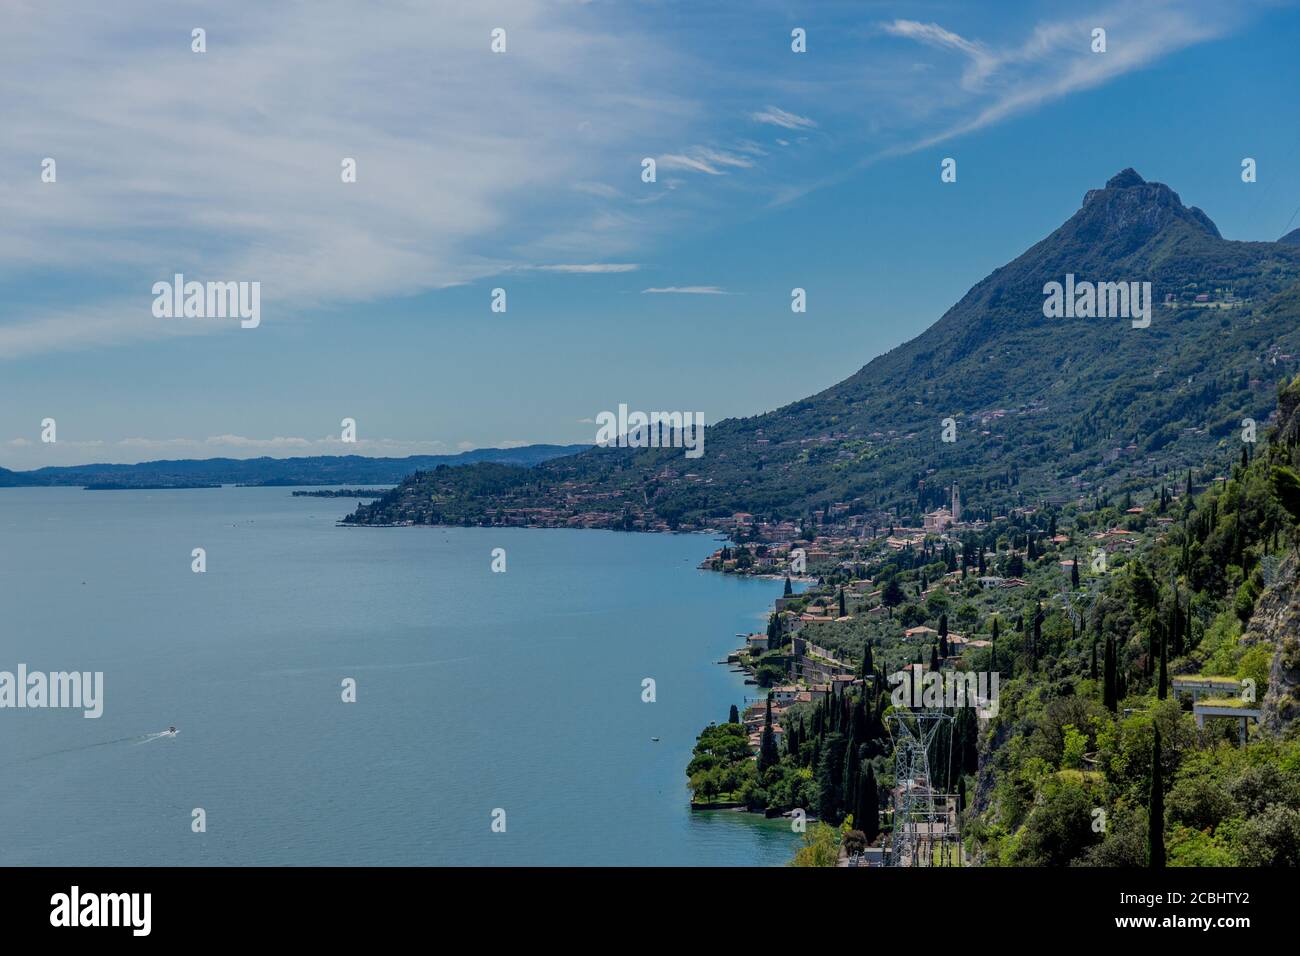 Holiday and Italian summer feeling along Lake Garda - Italy/Europe Stock Photo